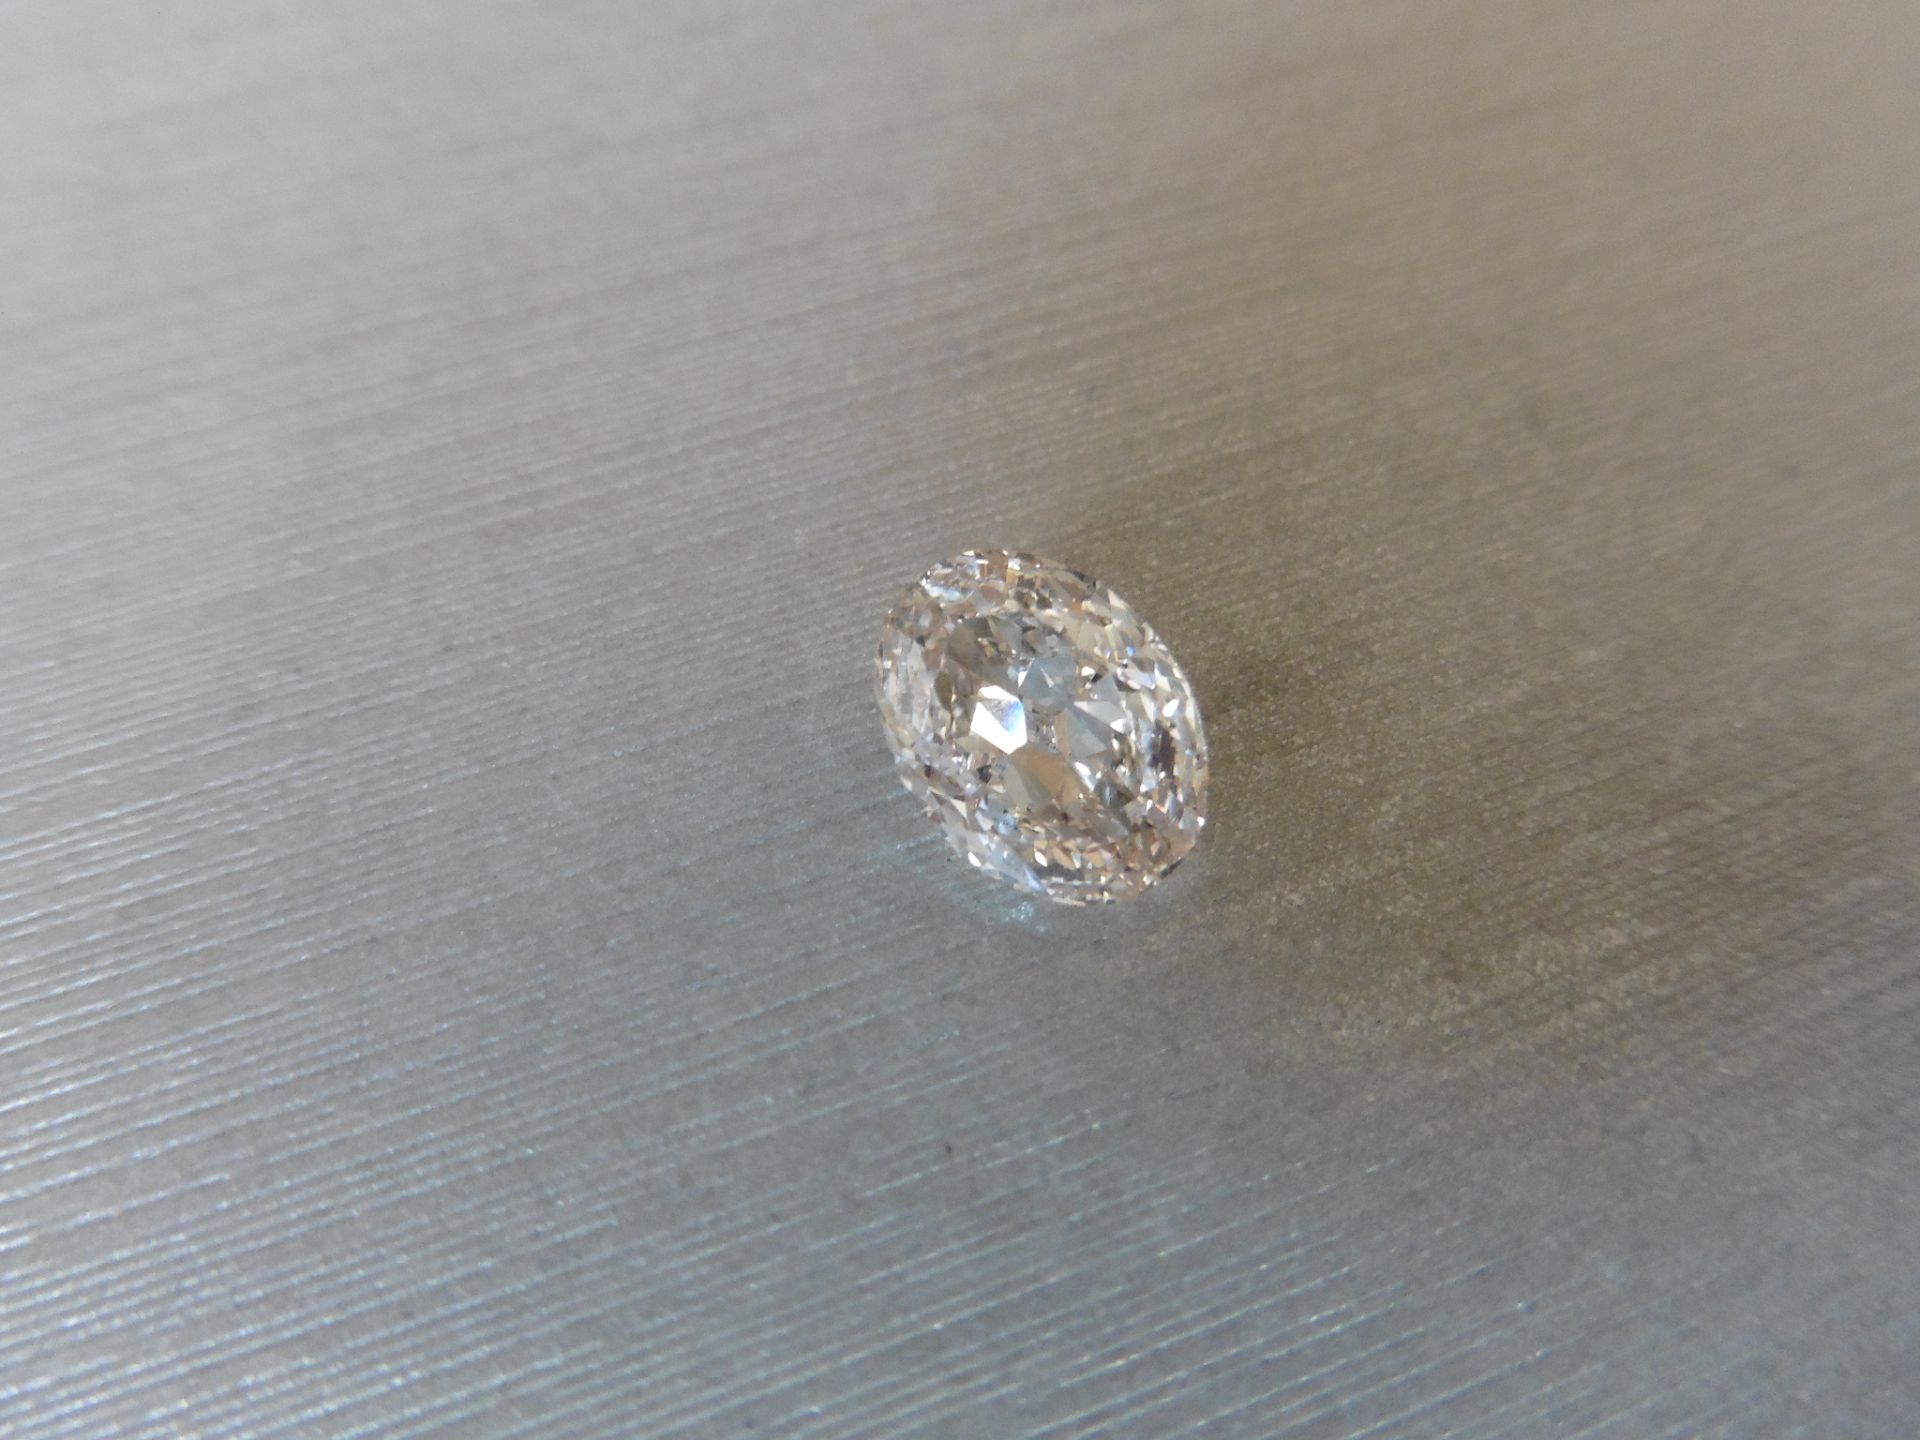 2.21ct loose oval cut diamond. M colour, VS2 clarity. 9.02 x 6.79 x 4.35mm. GIA cert – 6212135741.